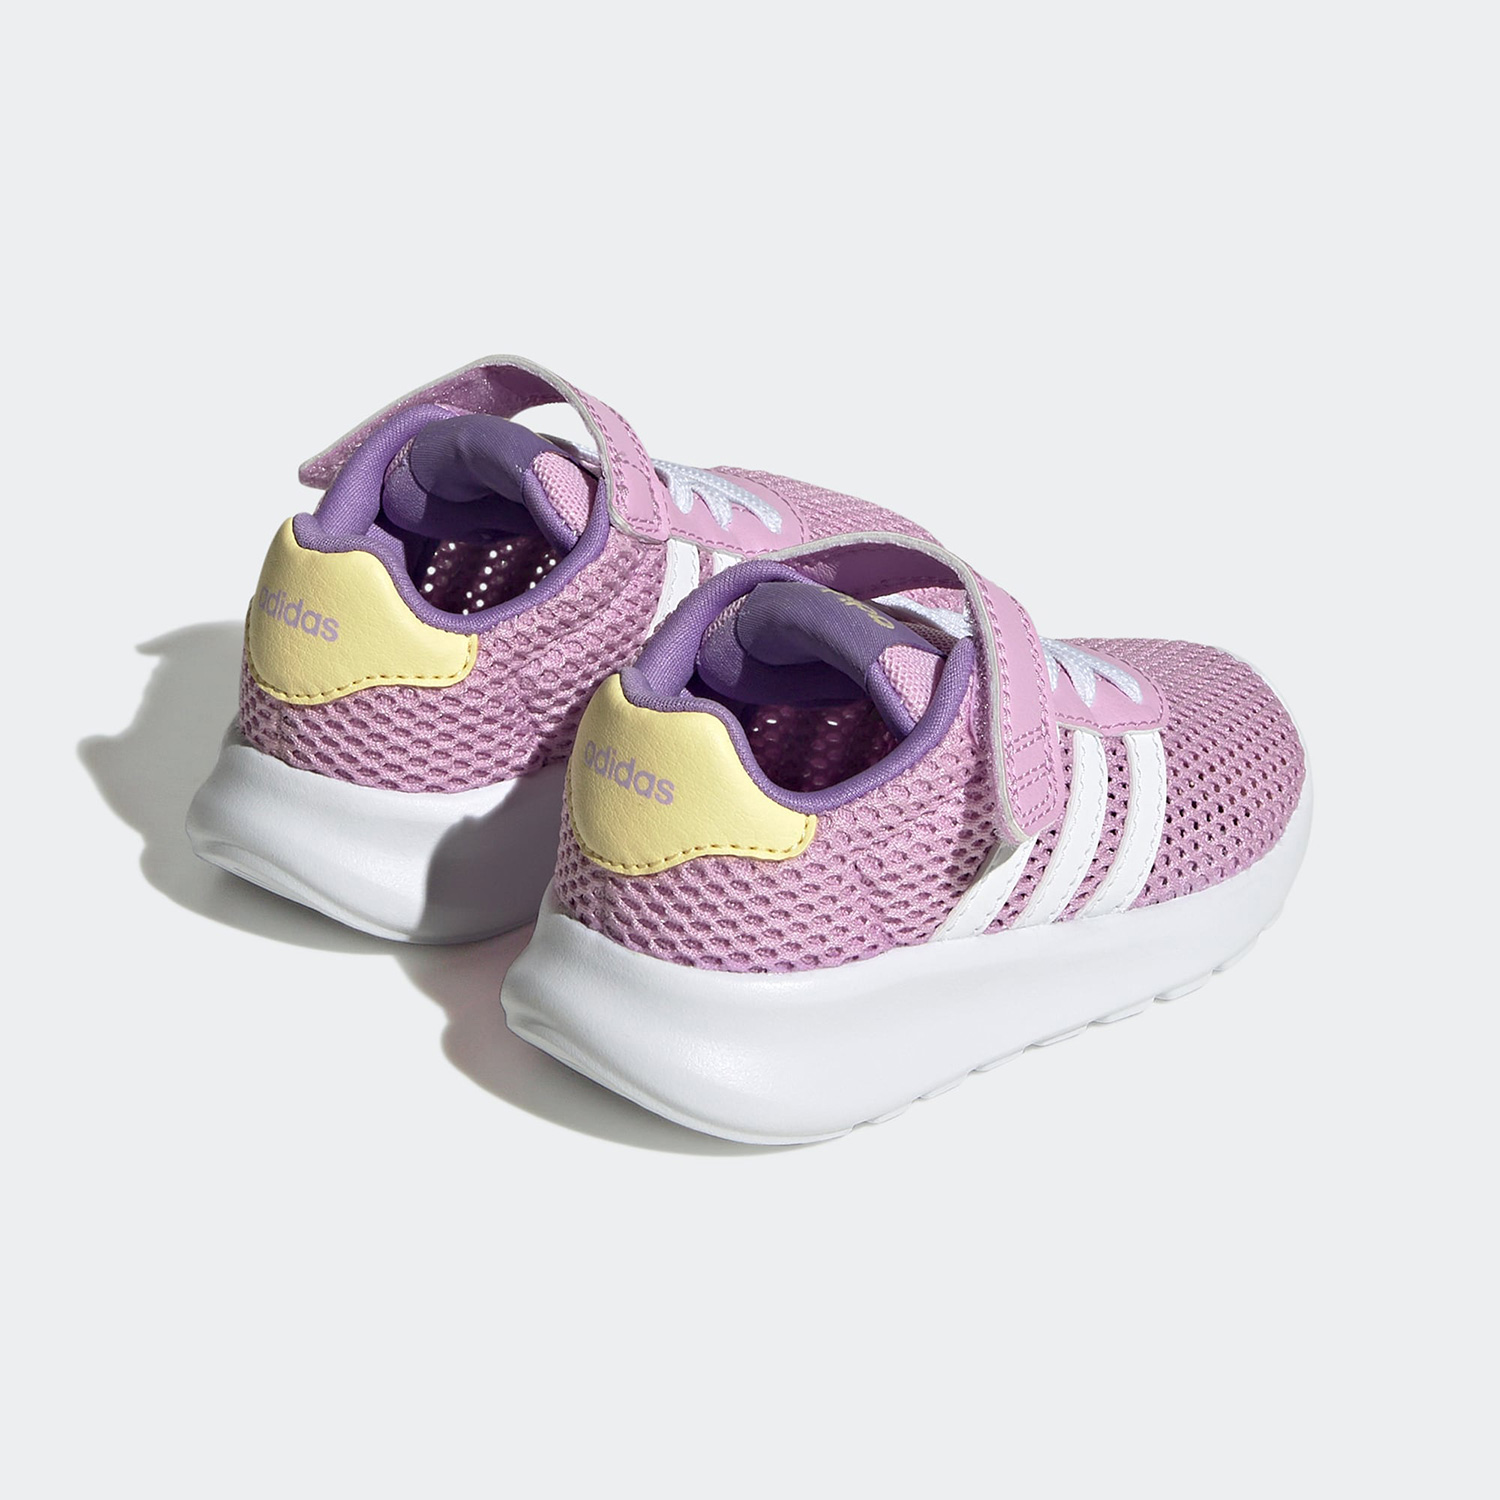 Adidas/阿迪达斯正品儿童休闲跑步透气舒适宝宝网面运动鞋H06277